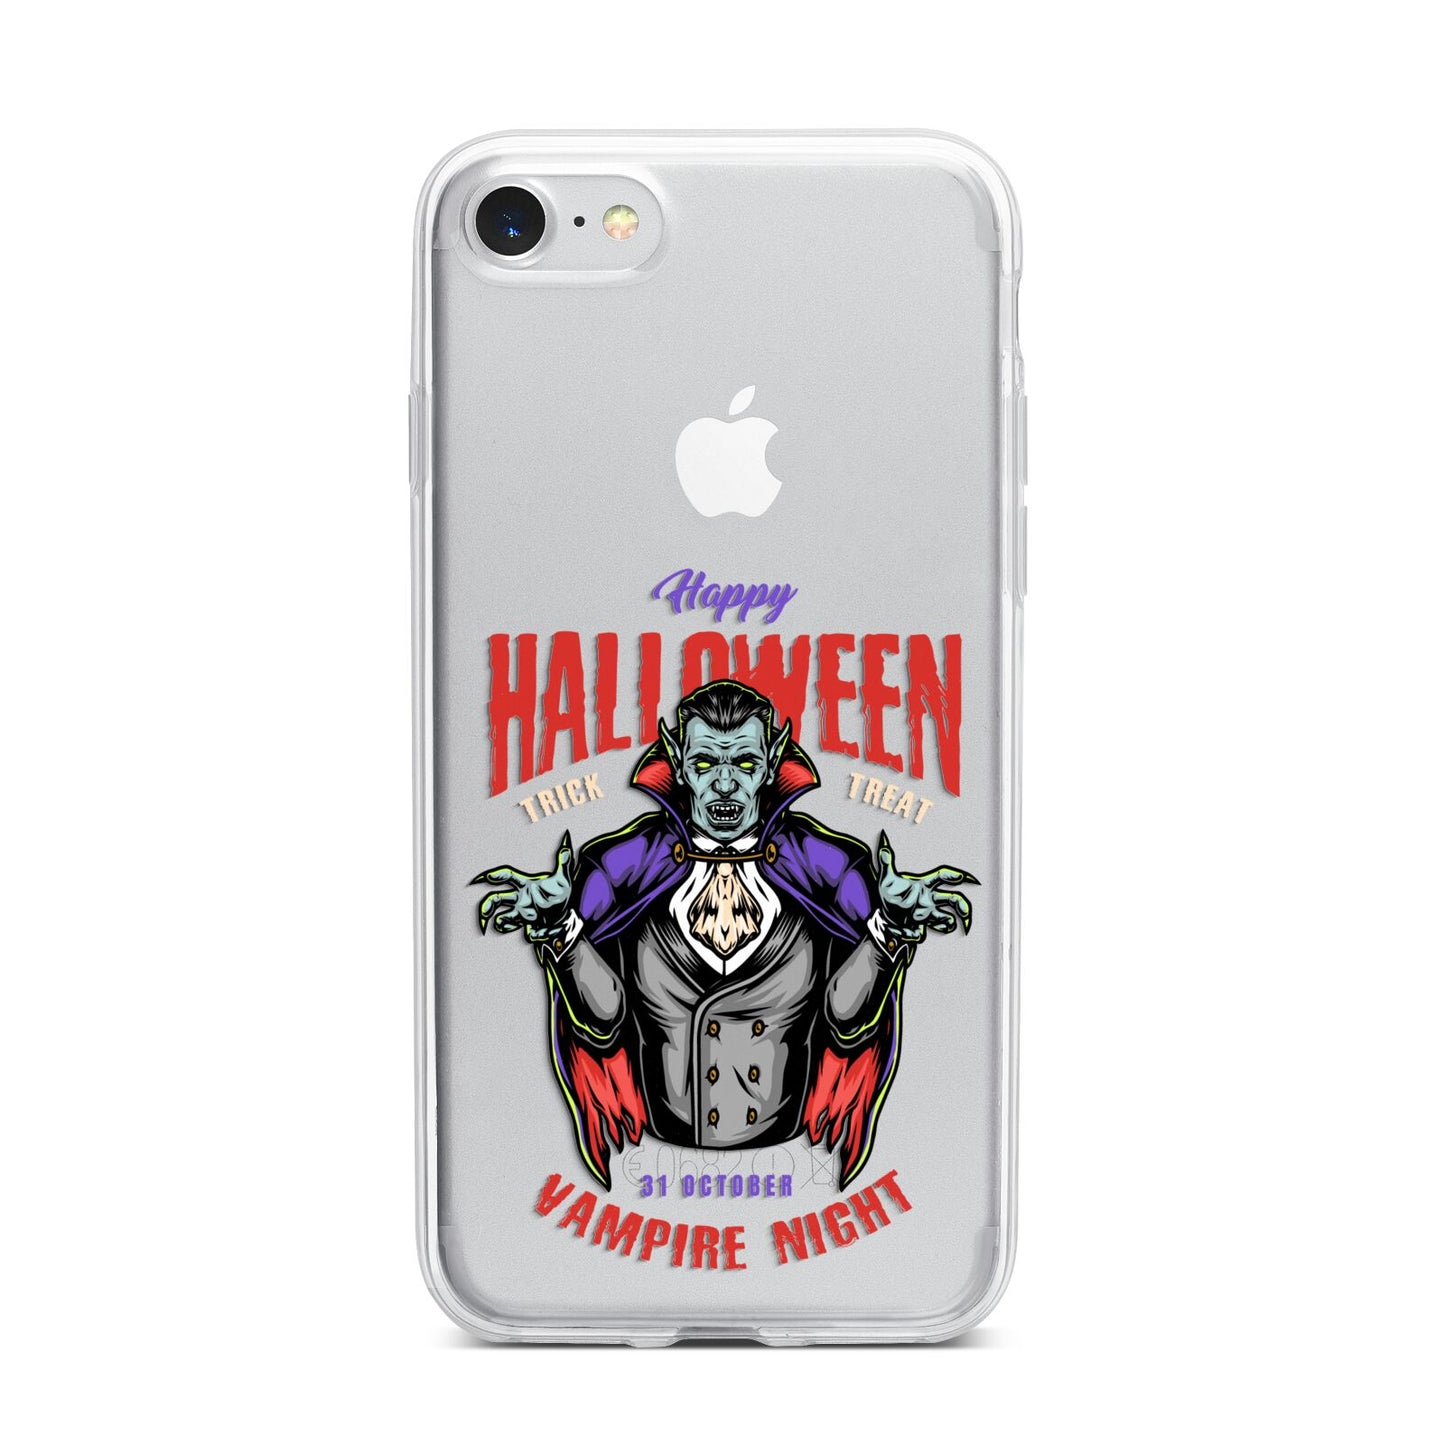 Vampire Night iPhone 7 Bumper Case on Silver iPhone